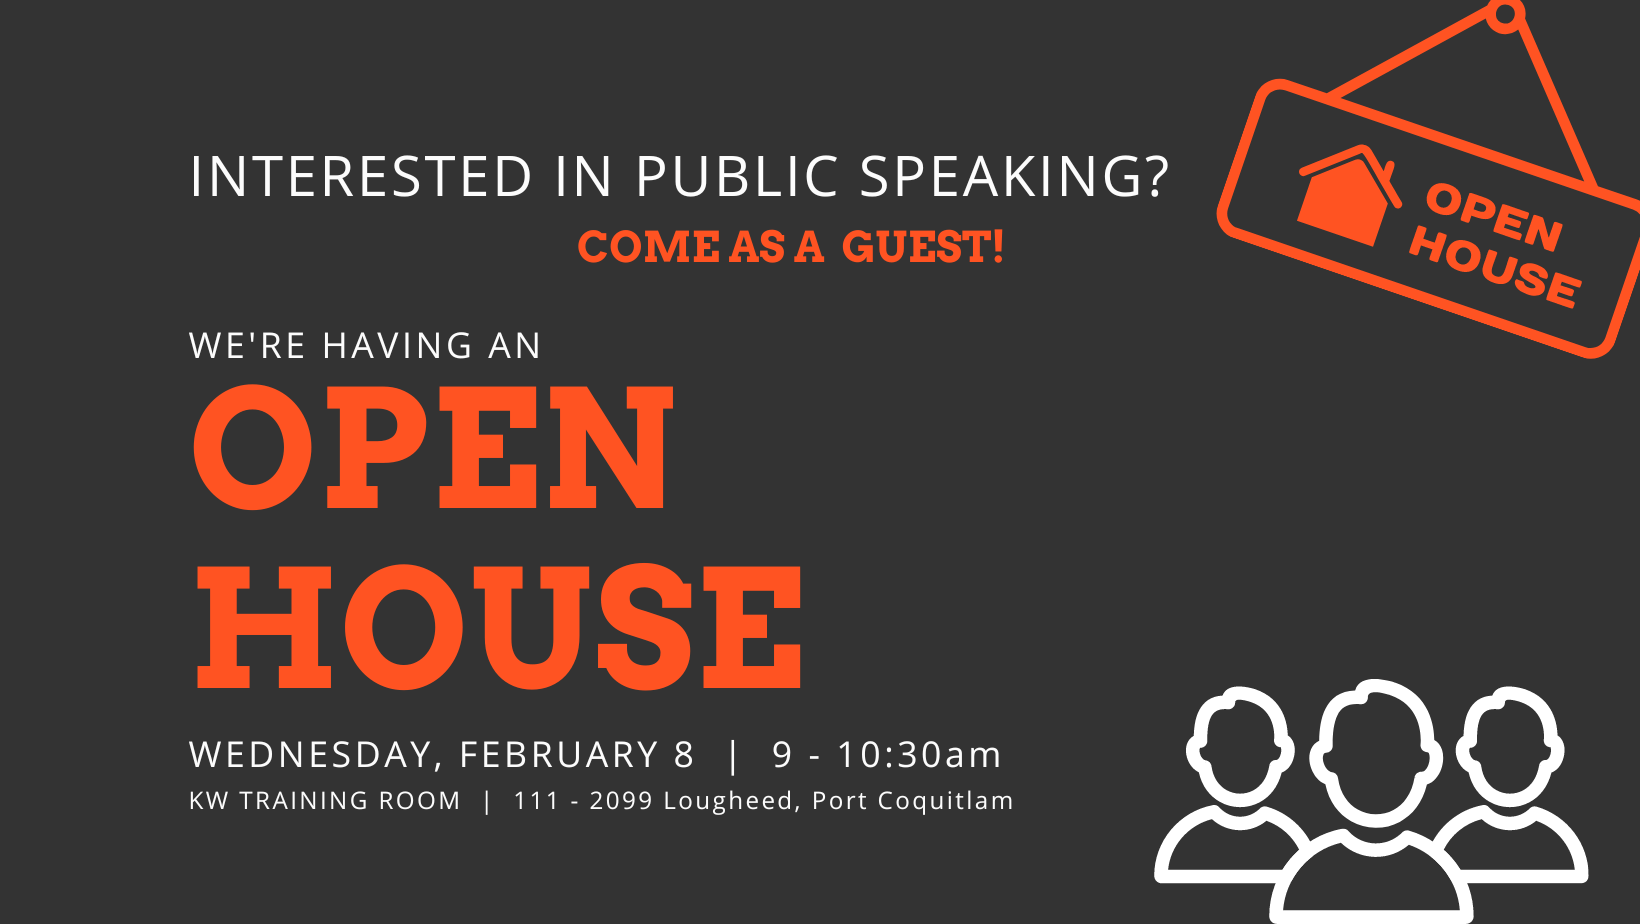 Open House invitation for Feb 8 open house